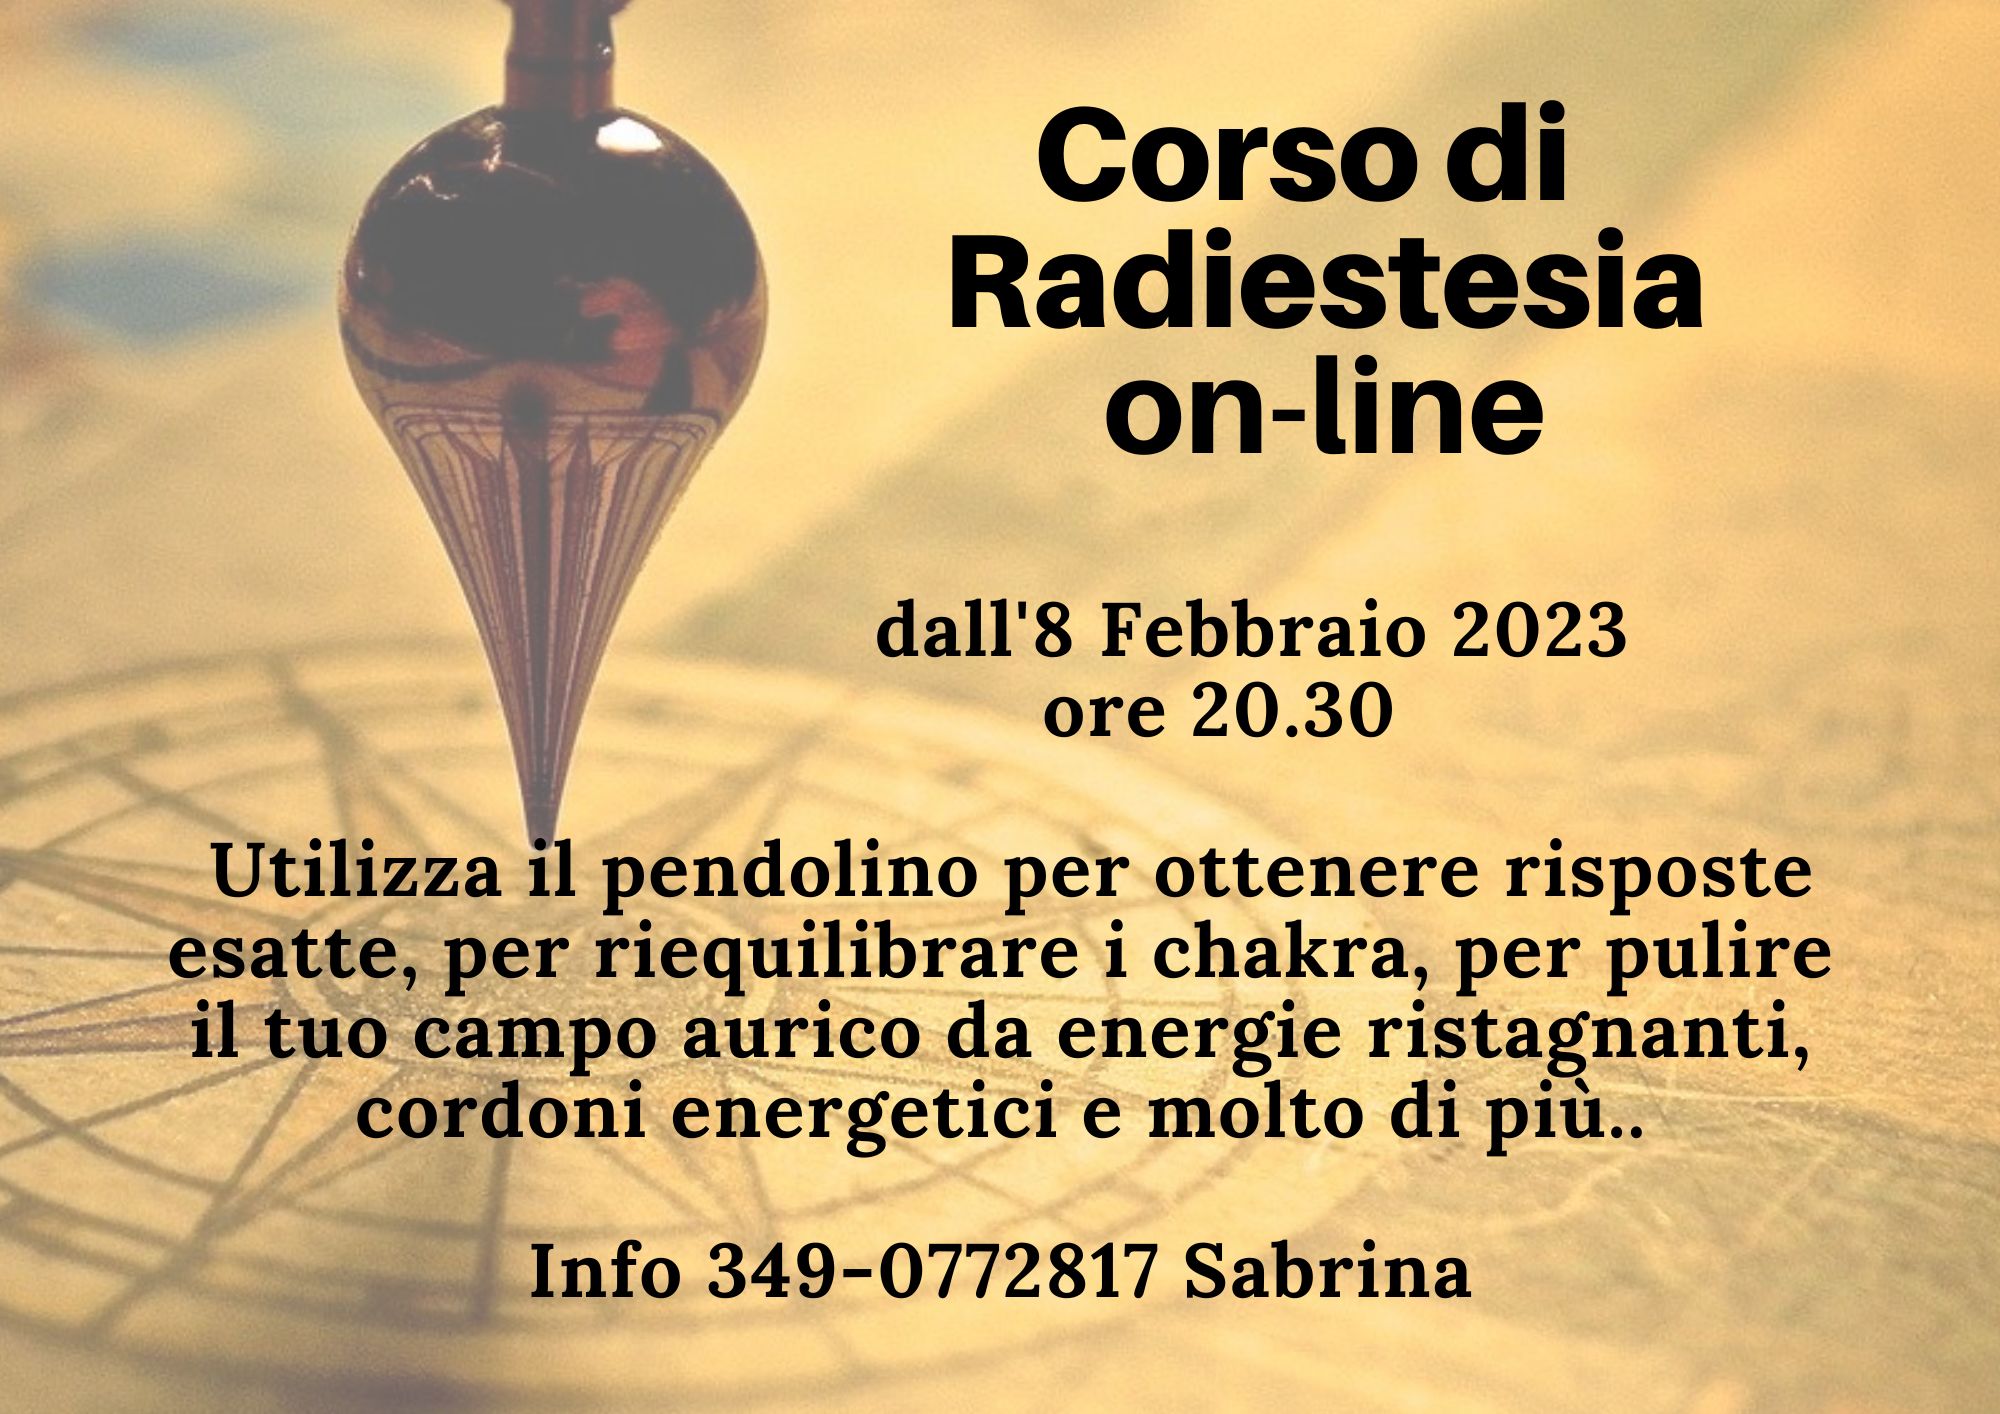 Corso Radiestesia on-line